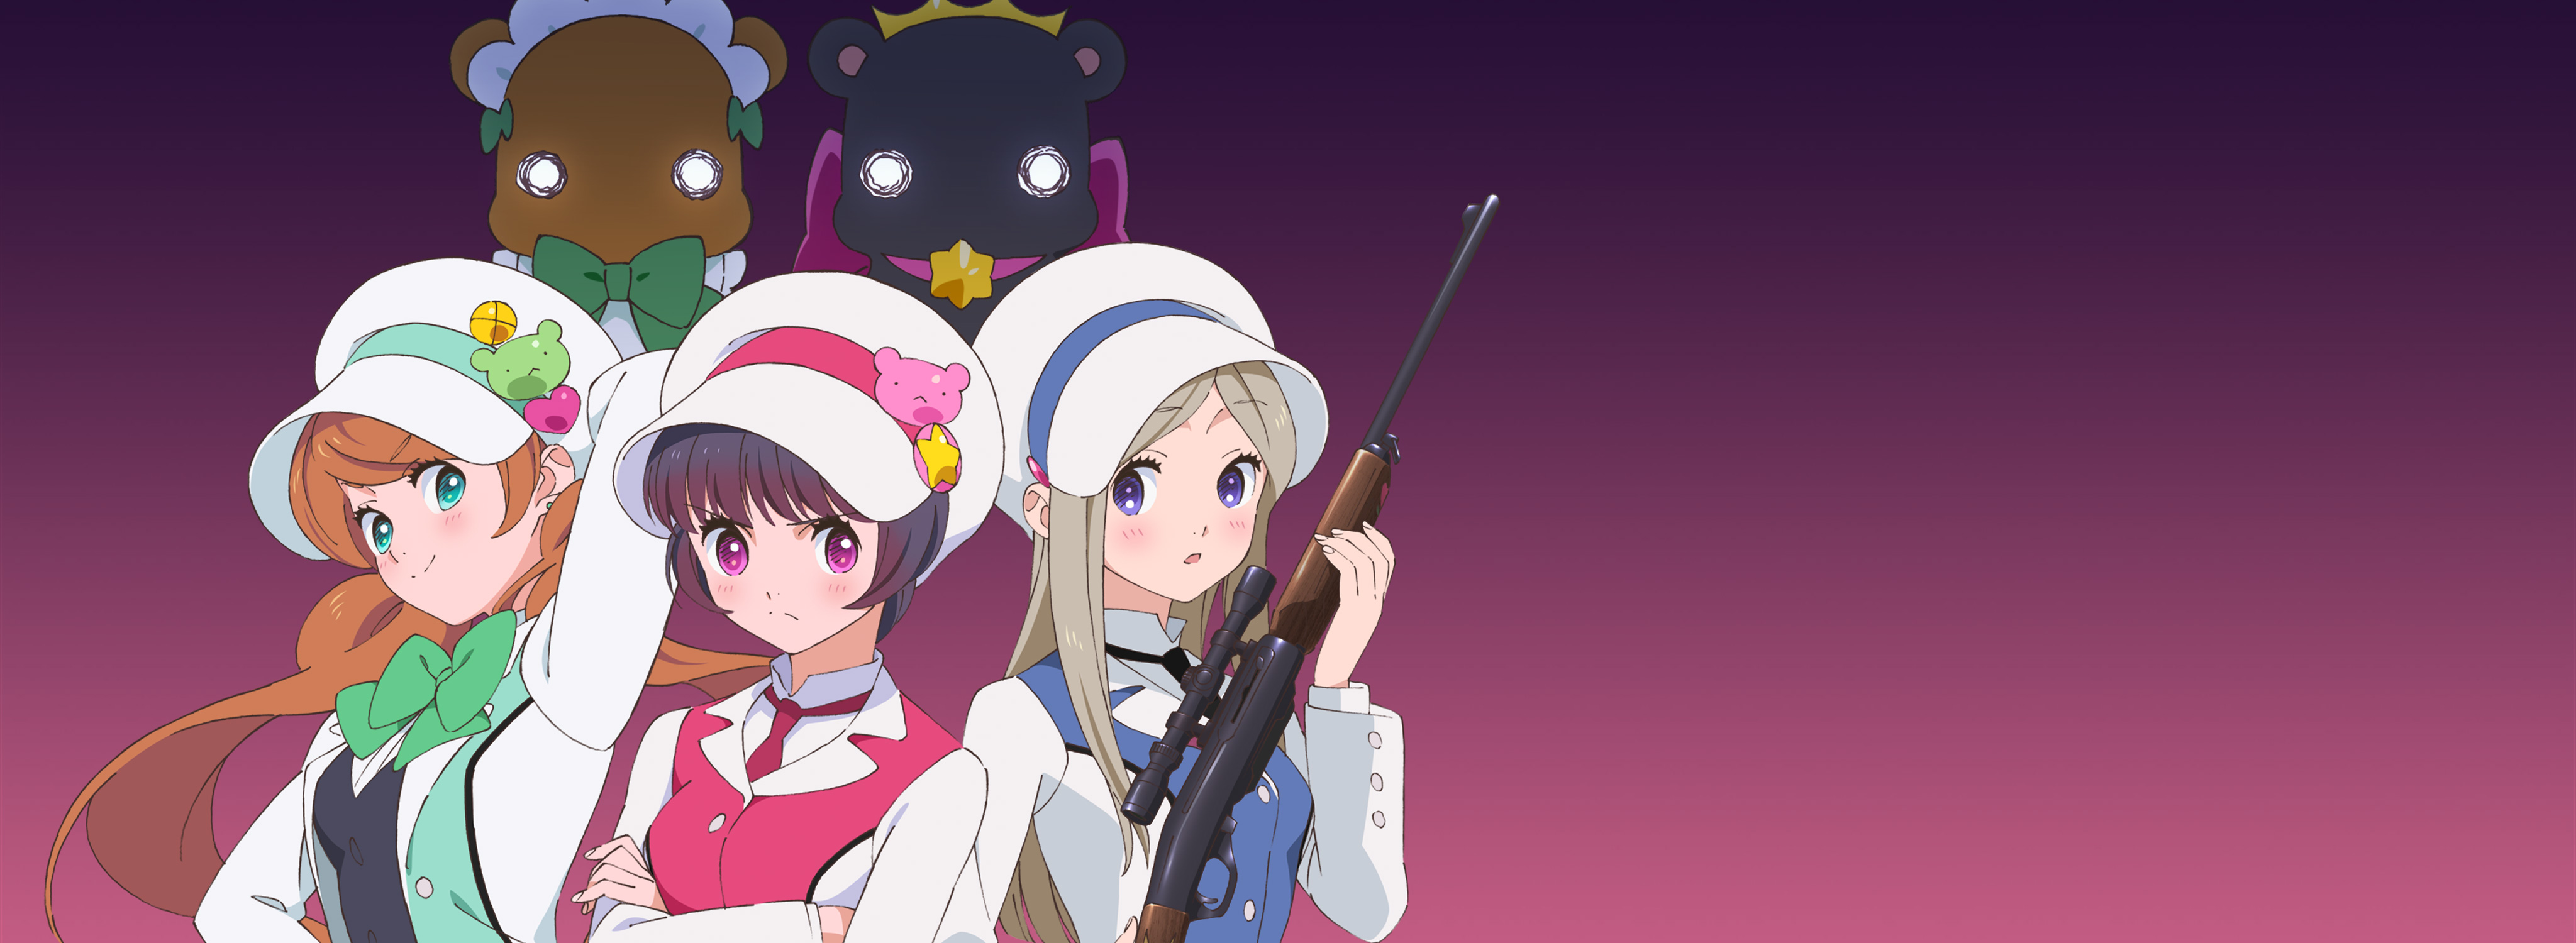 Anime Yurikuma Arashi HD Wallpaper | Background Image